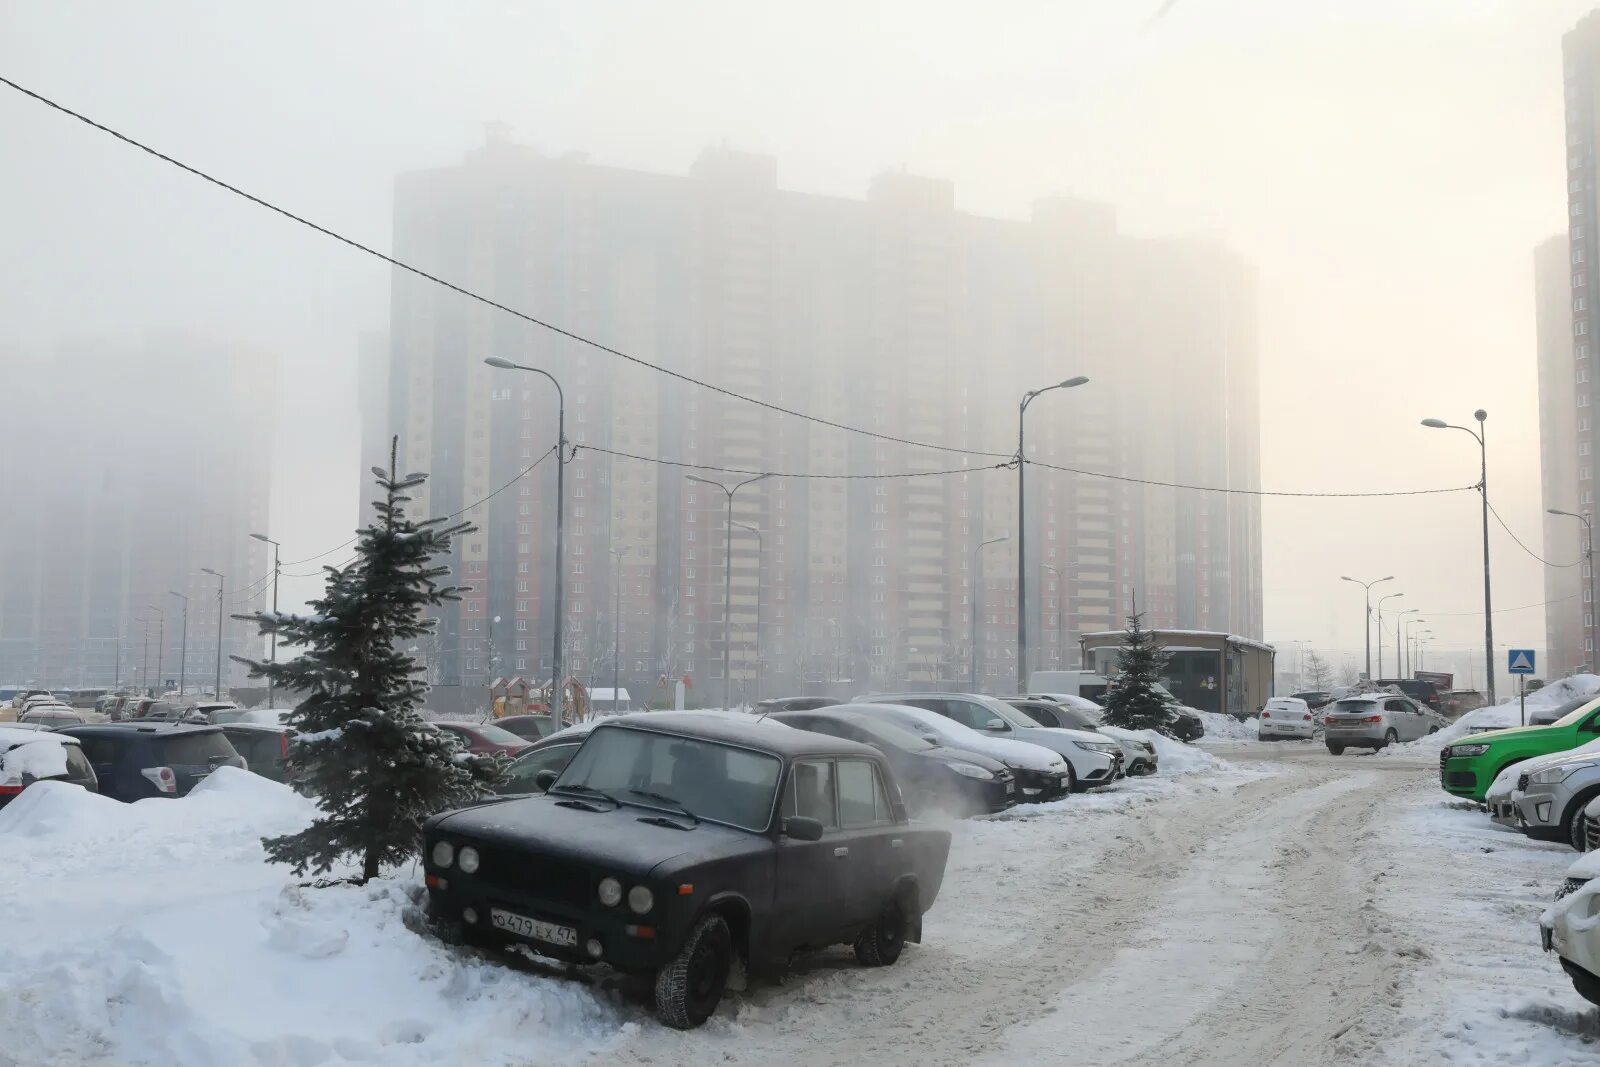 5 января 2023 г. Туман зимой в городе. Зимний туман в городе. Туманная зима город. Туман зима город.